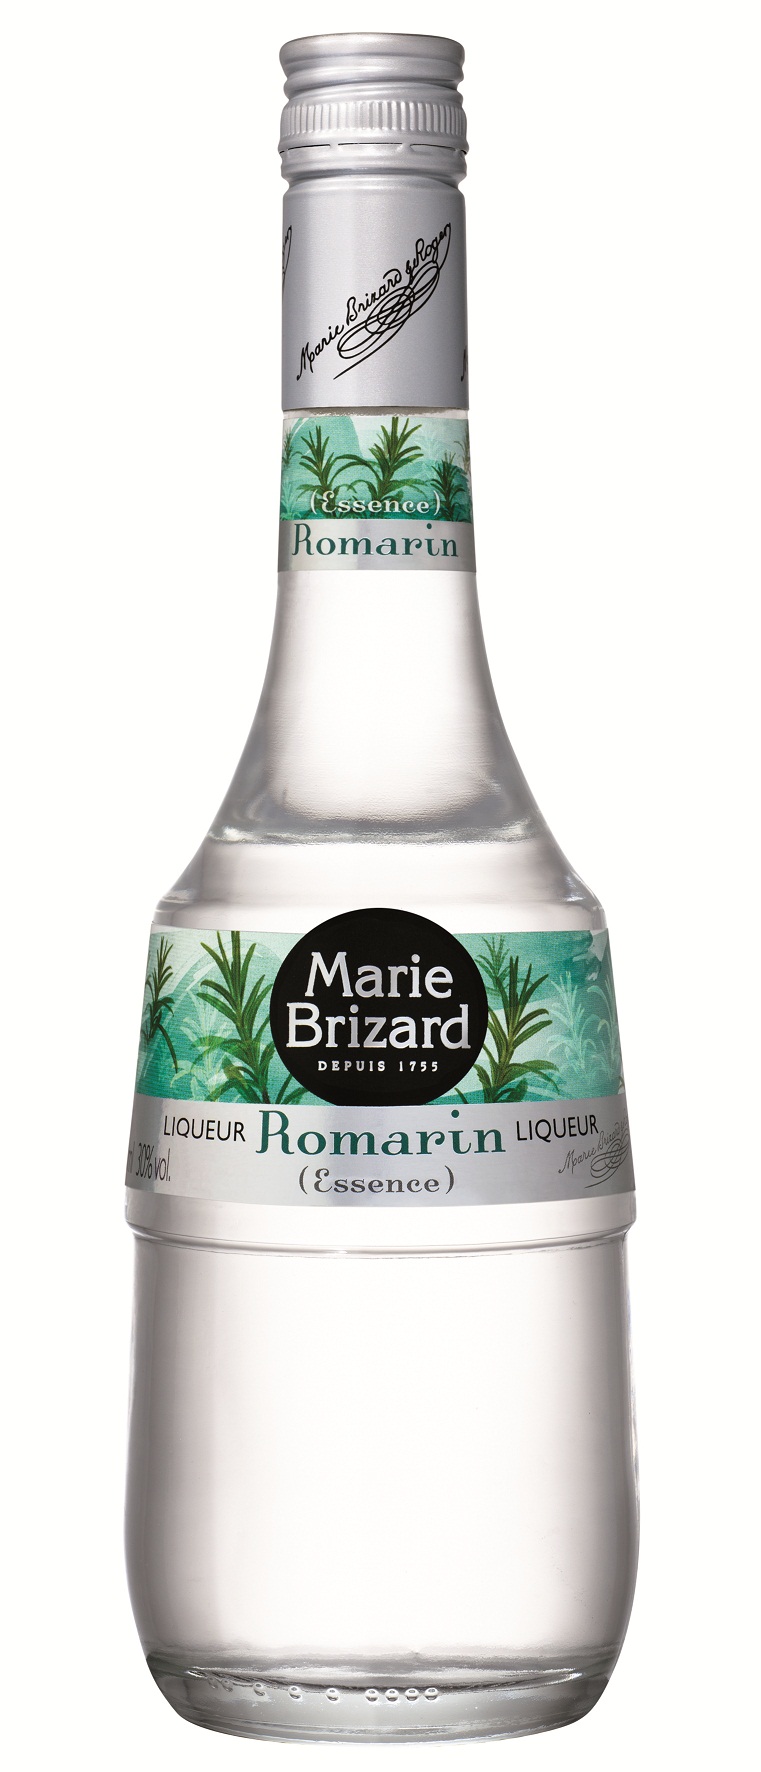 Essence Rosemary der Marke Marie Brizard 30% 0,5l Flasche